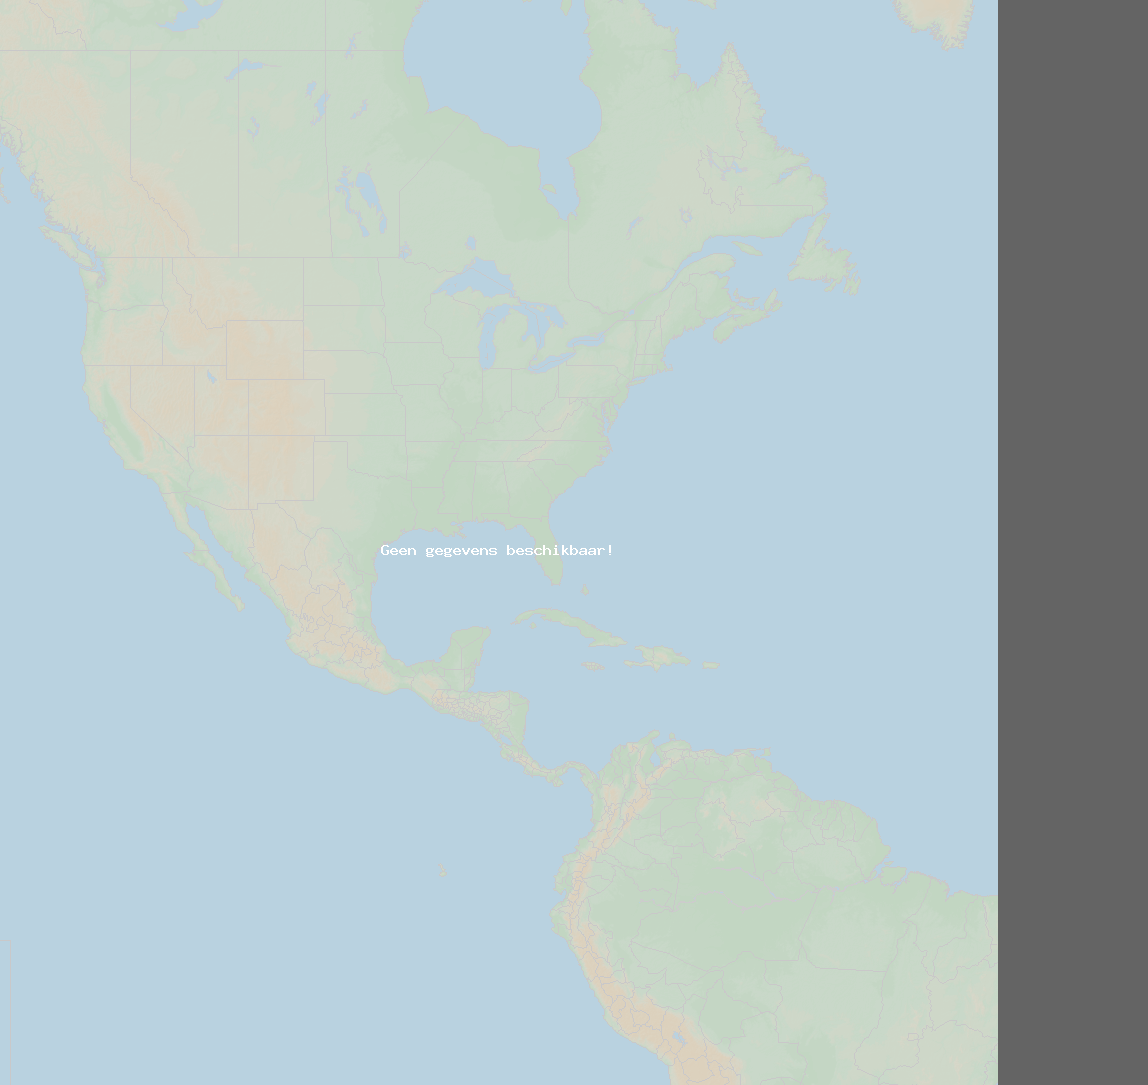 Inslagverhouding (Station Rockford (1737B)) North America 2024 januari